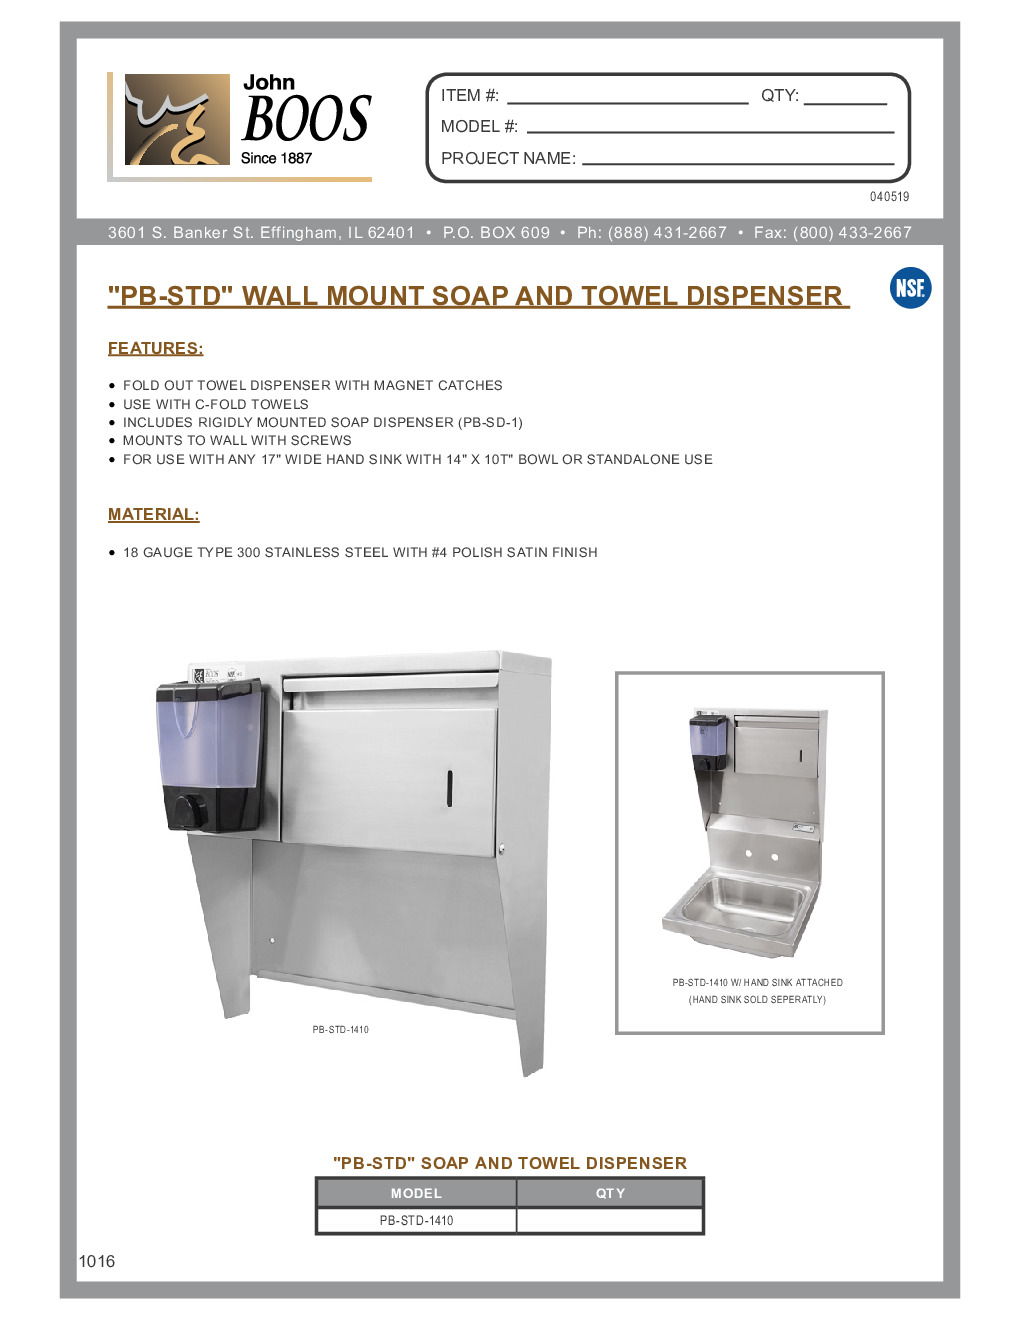 John Boos PB-STD-1410 Paper Towel Dispenser